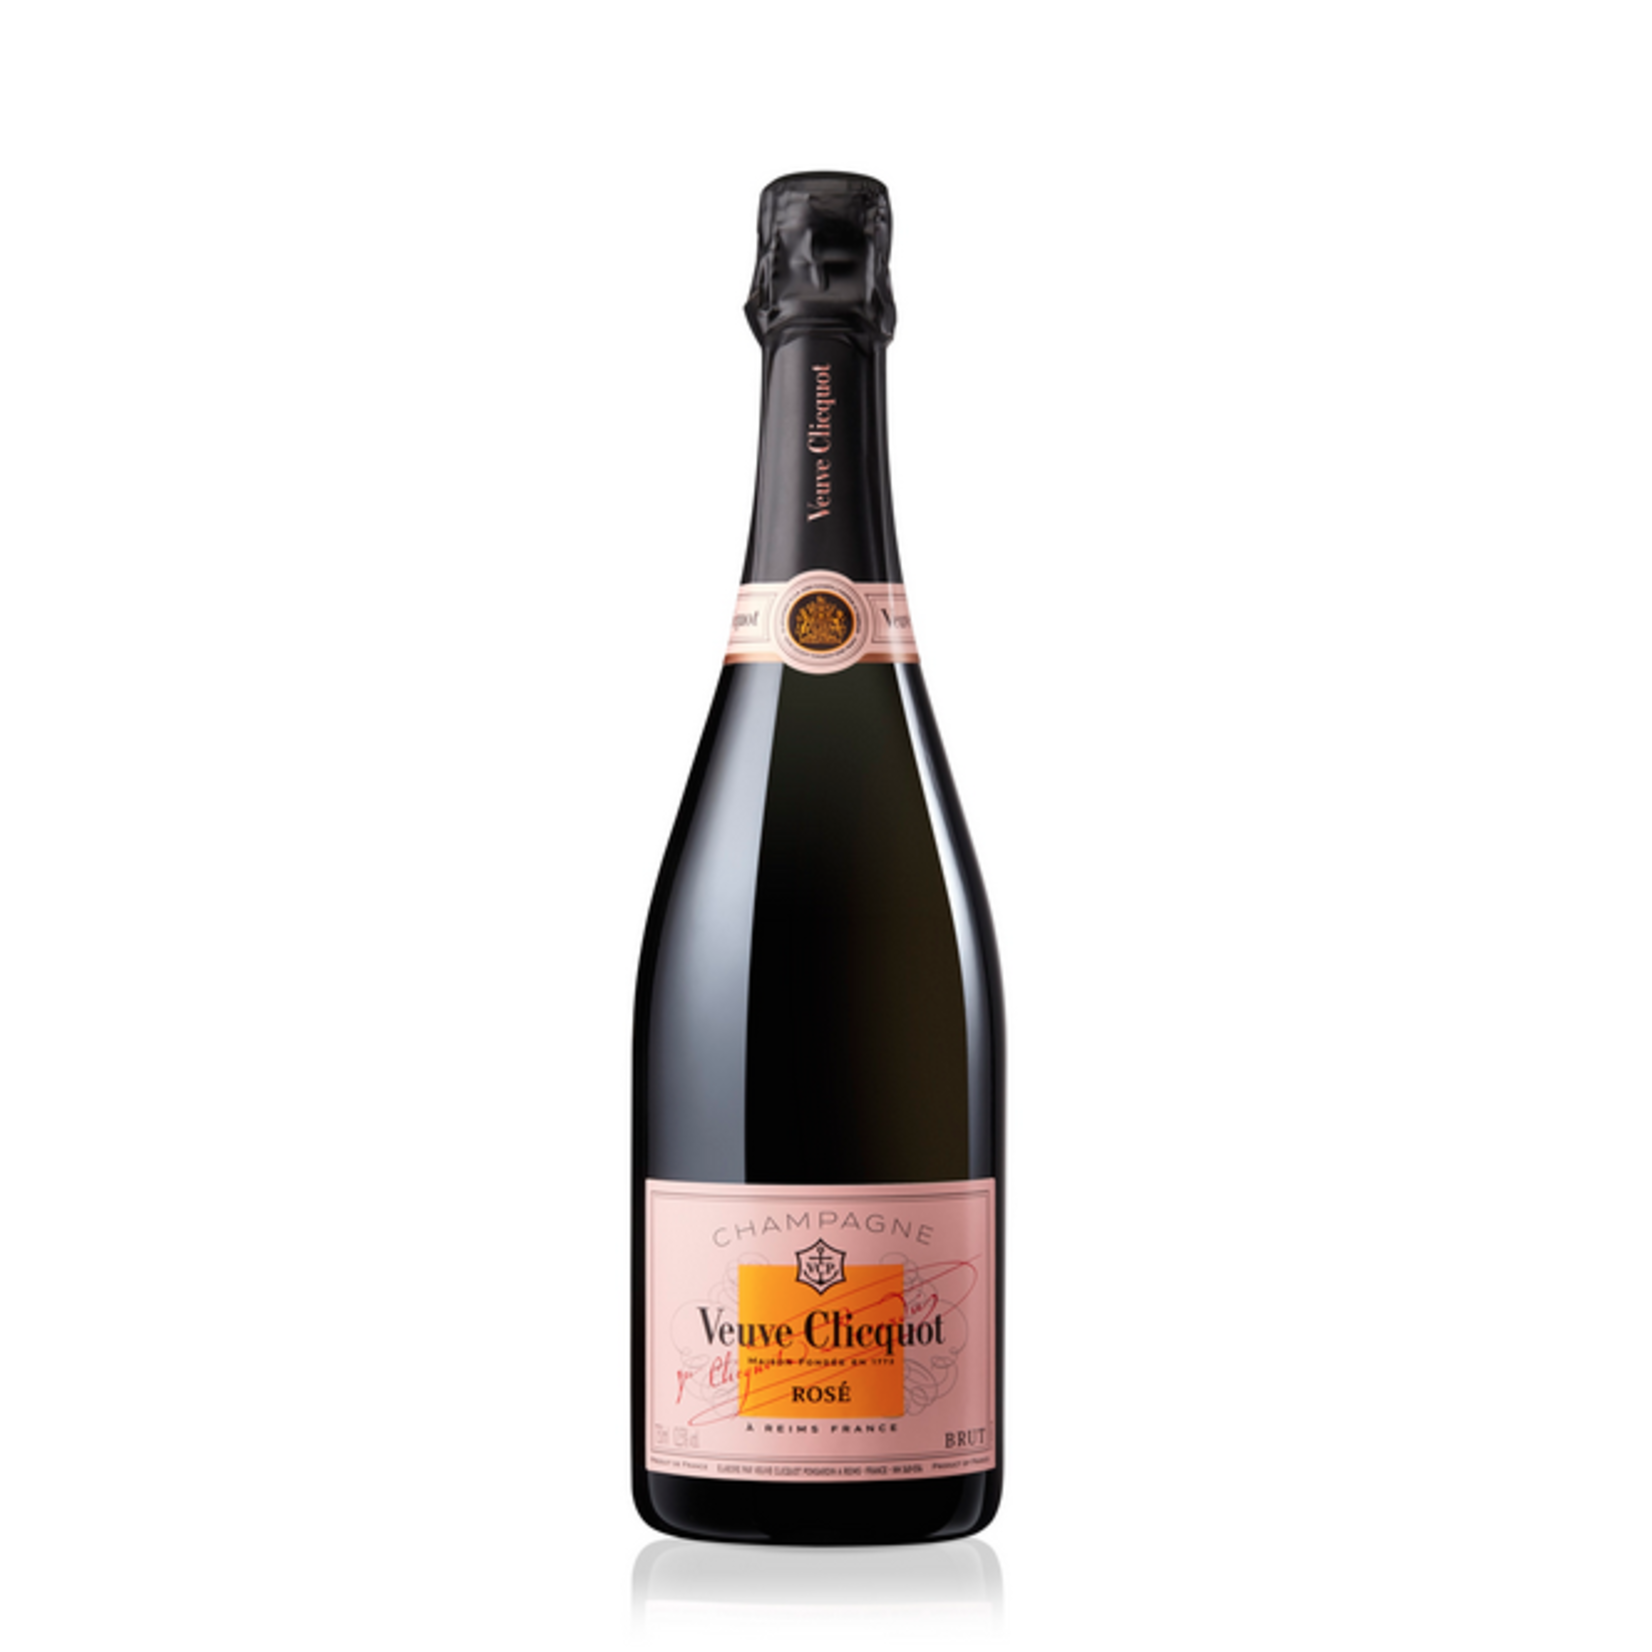 Veuve Clicquot Veuve Clicquot Rose Champagne  France  91pts-WS, 90pts-D